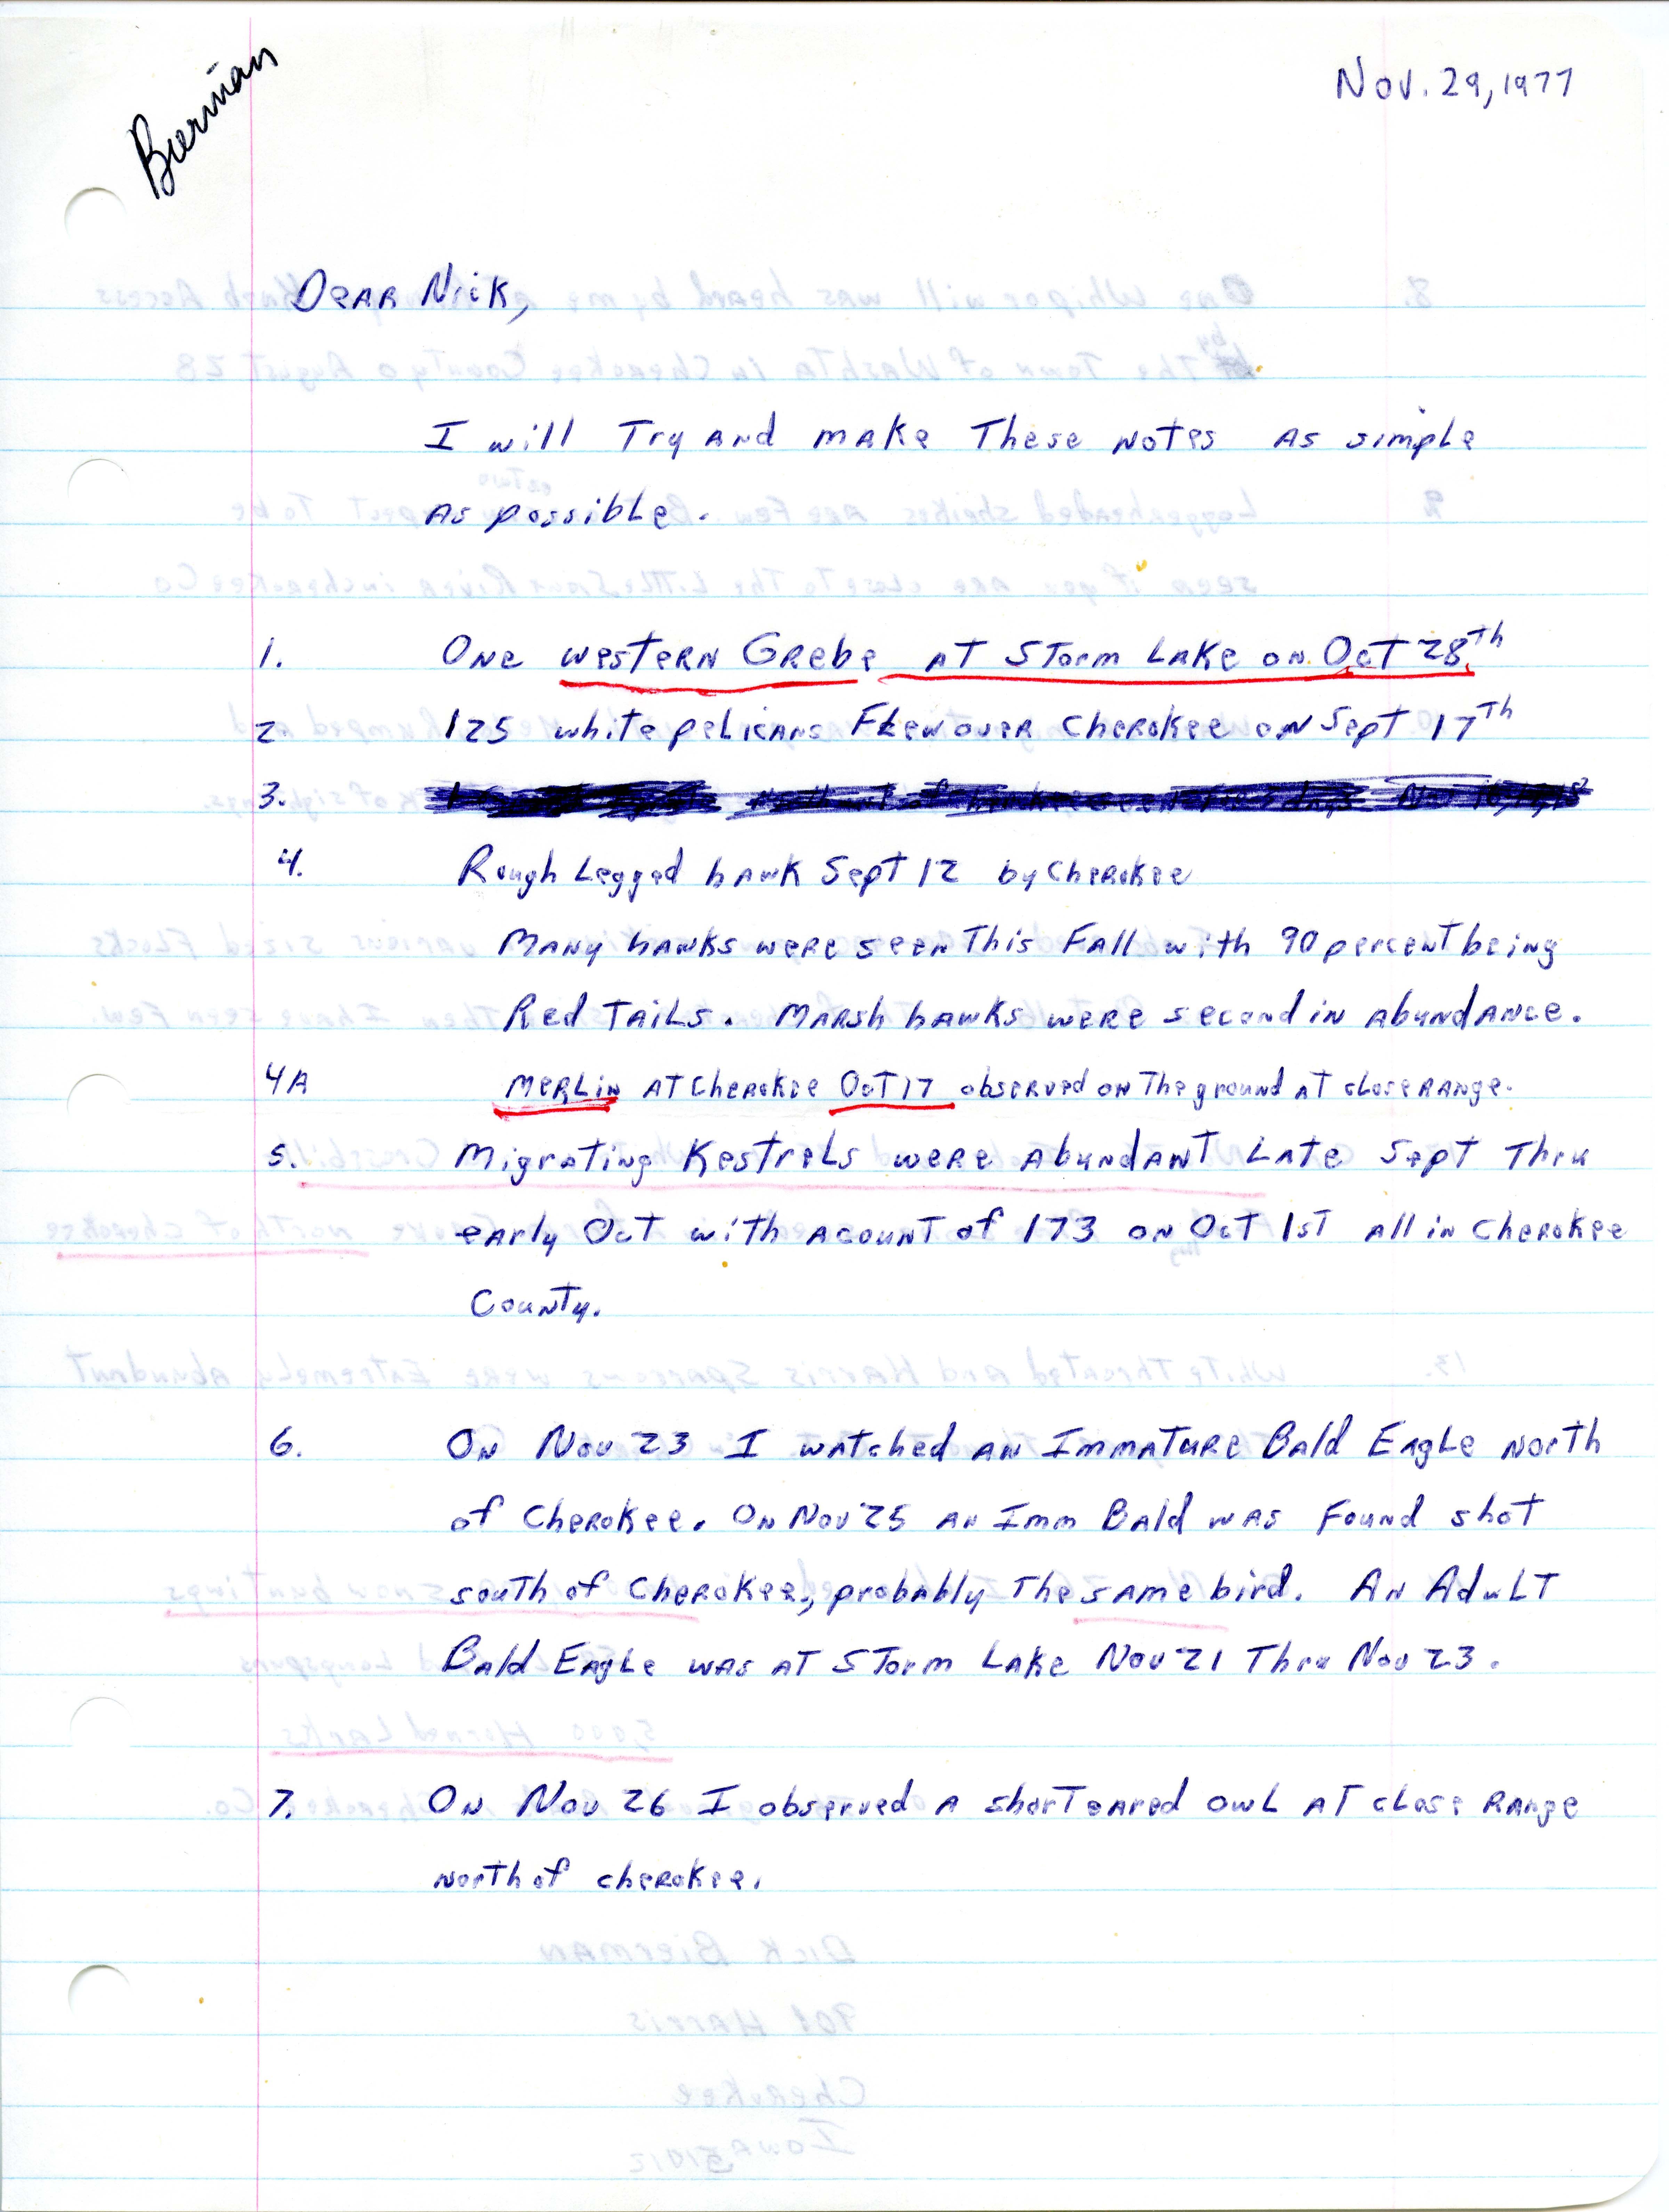 Dick Bierman letter to Nicholas S. Halmi regarding bird sightings, November 29, 1977